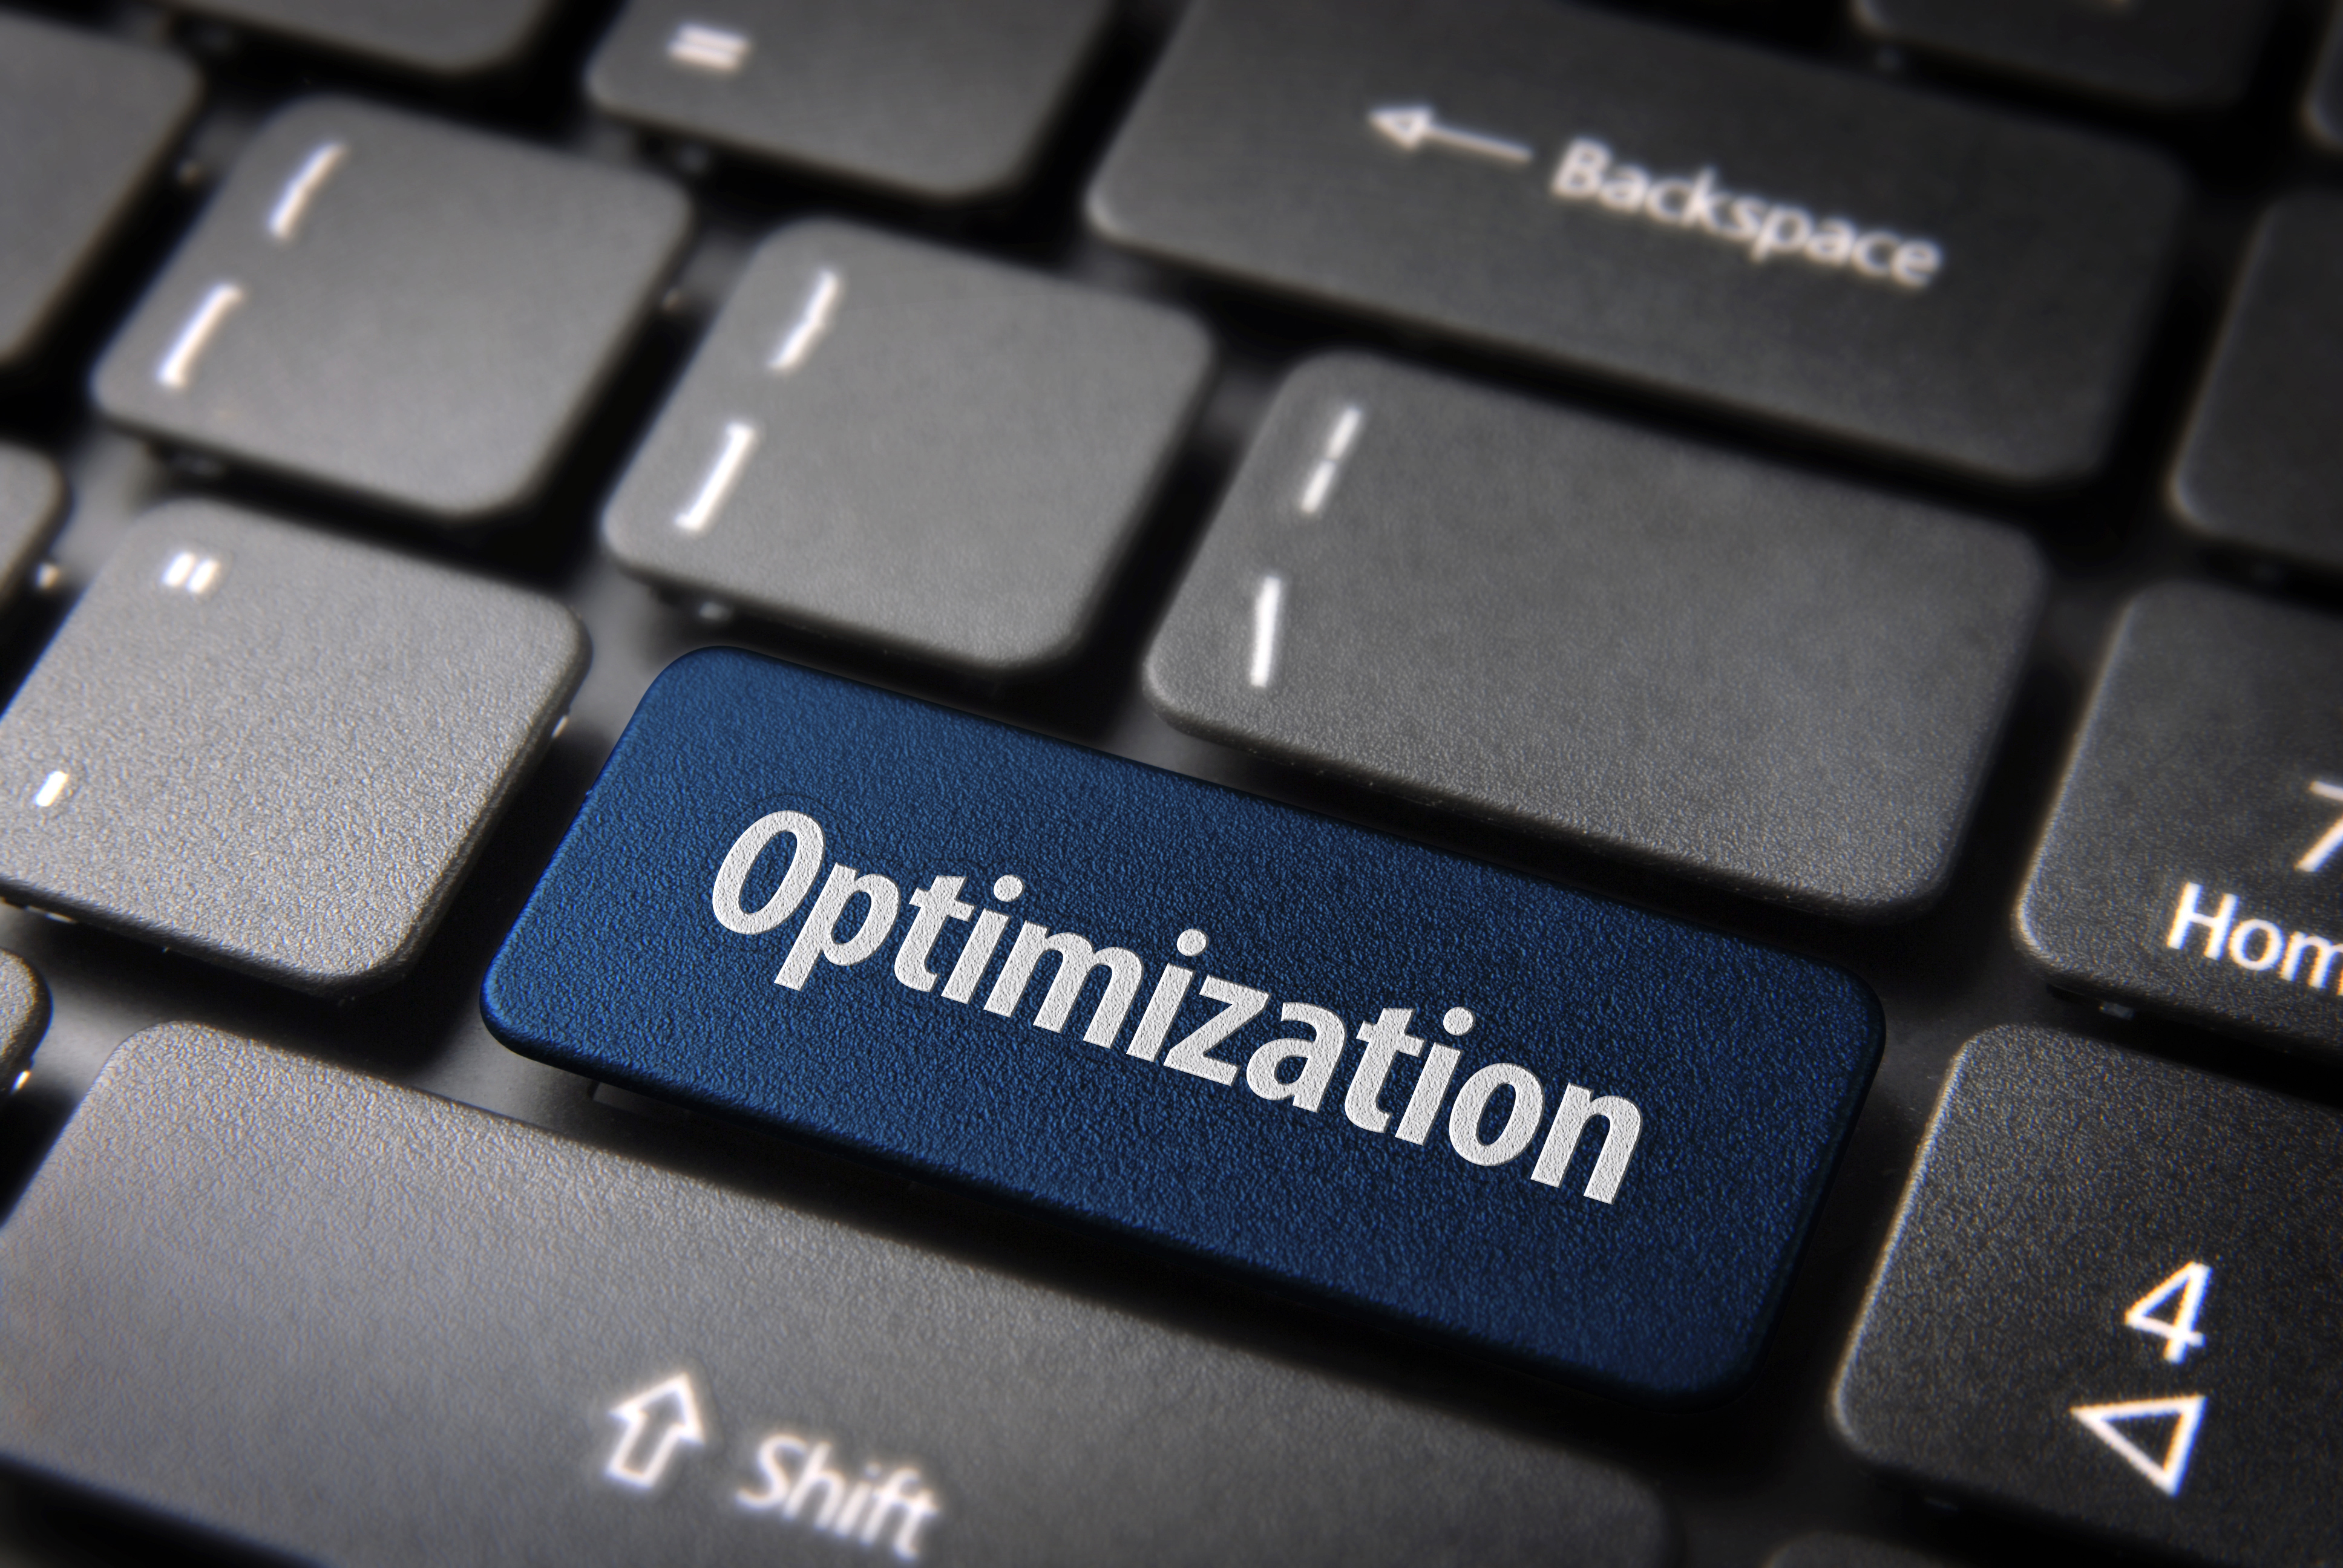 adwords-optimization